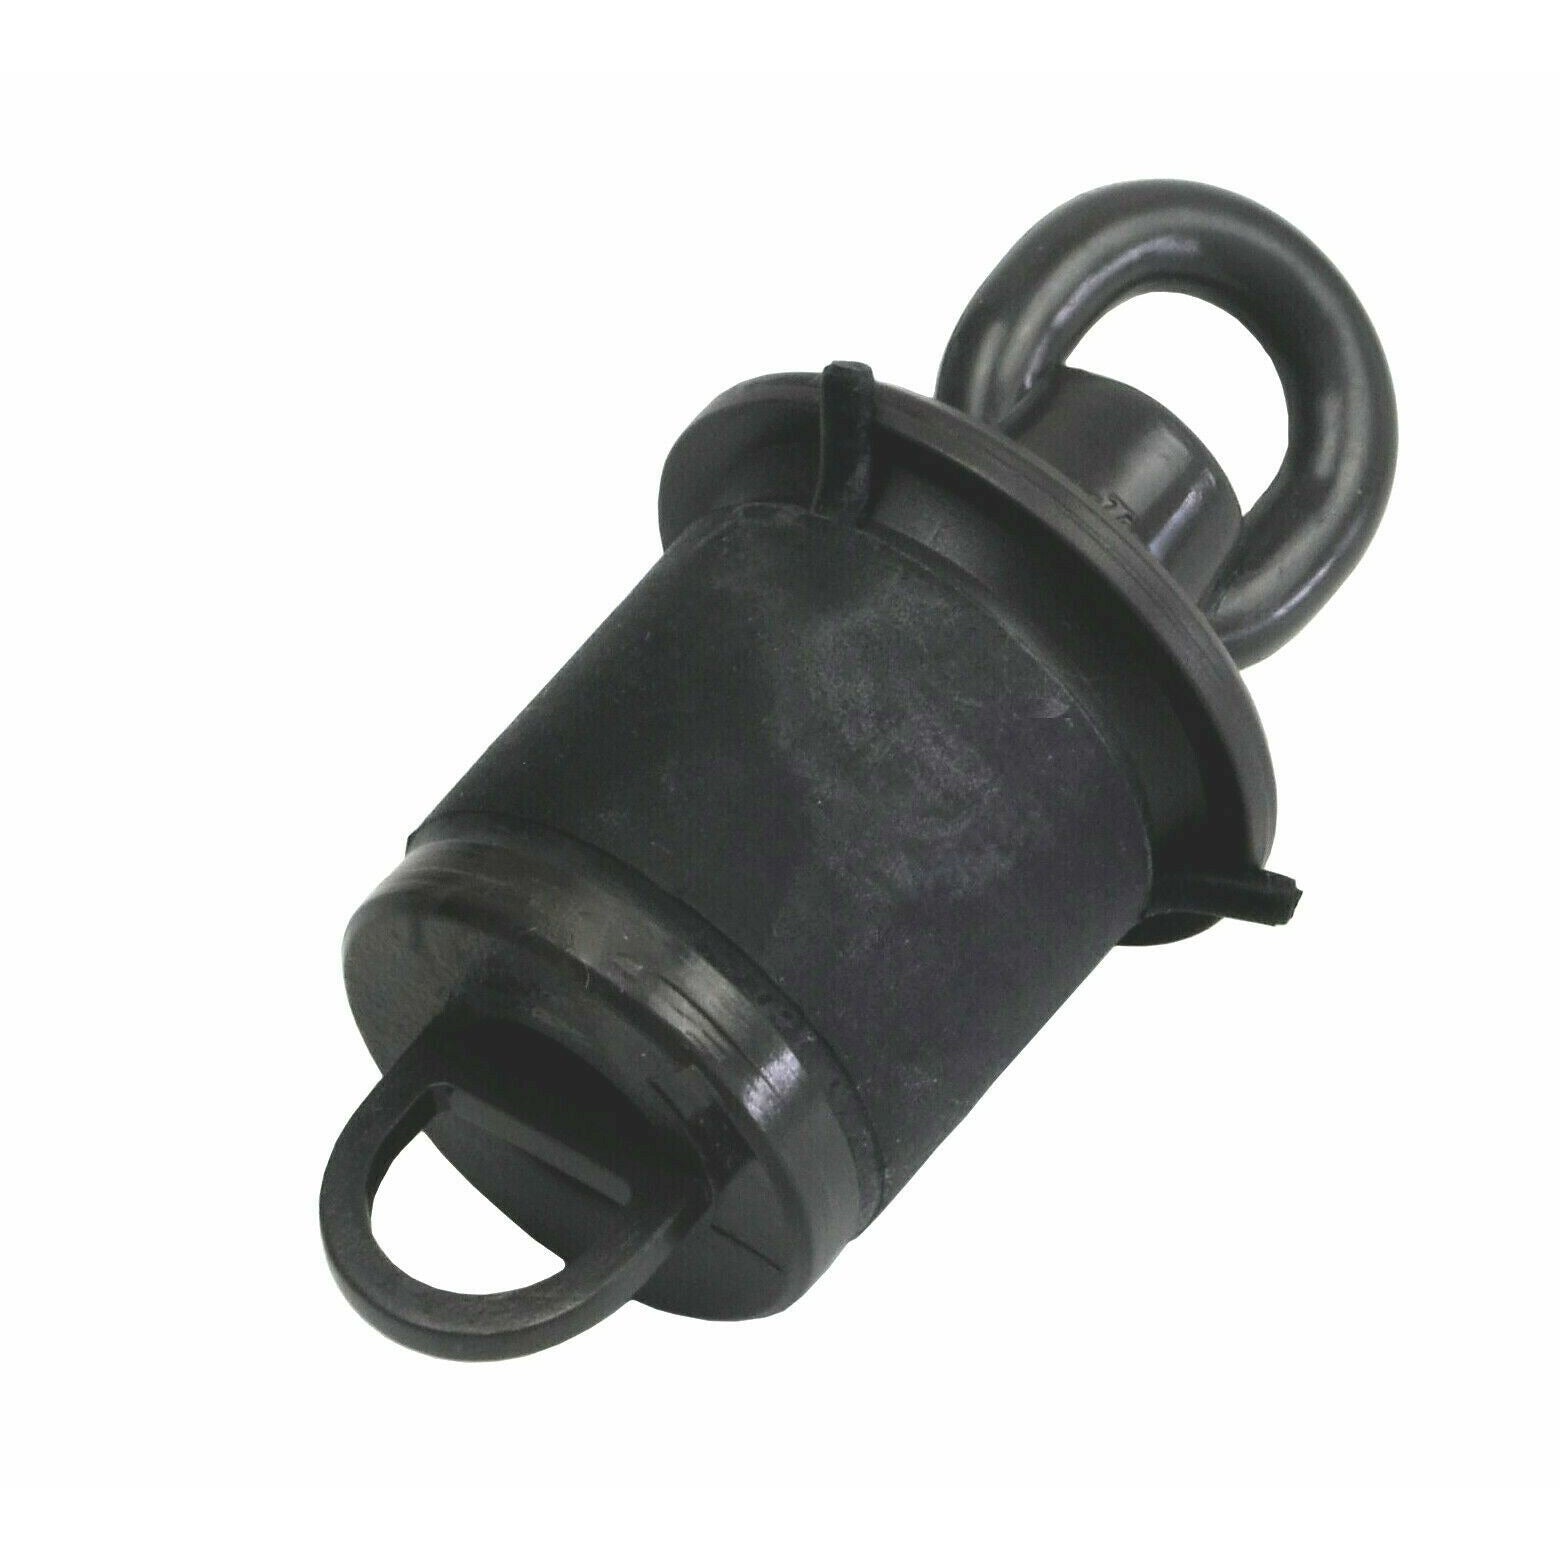 JM Series Expanding Mechanical Pipe Plug w/Elastic Gasket 38-46mm